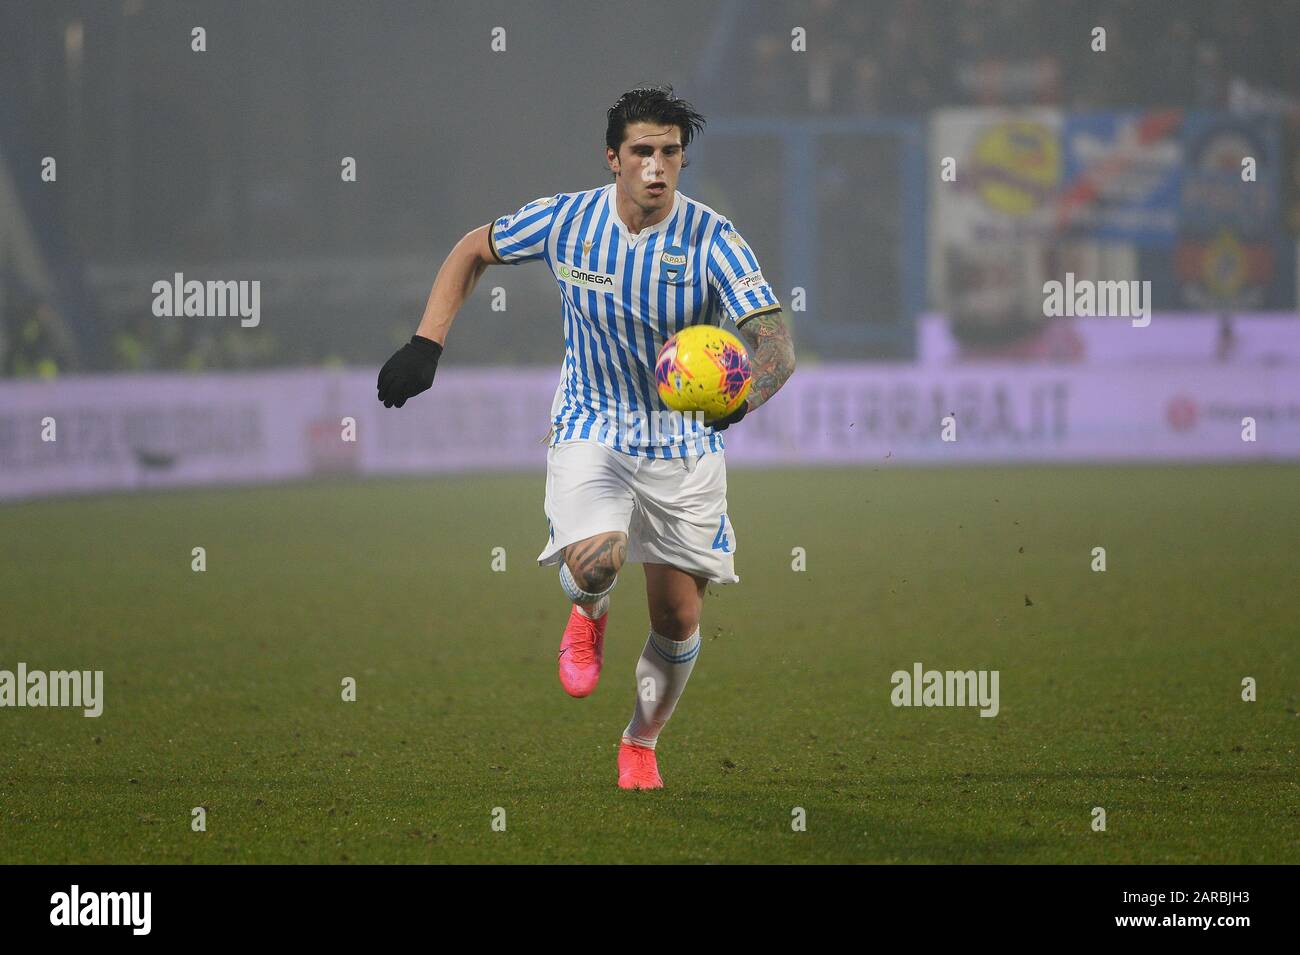 bonifazi spal during SPAL vs Bologna, Ferrara, Italy, 25 Jan 2020, Soccer italian Serie A soccer match Stock Photo